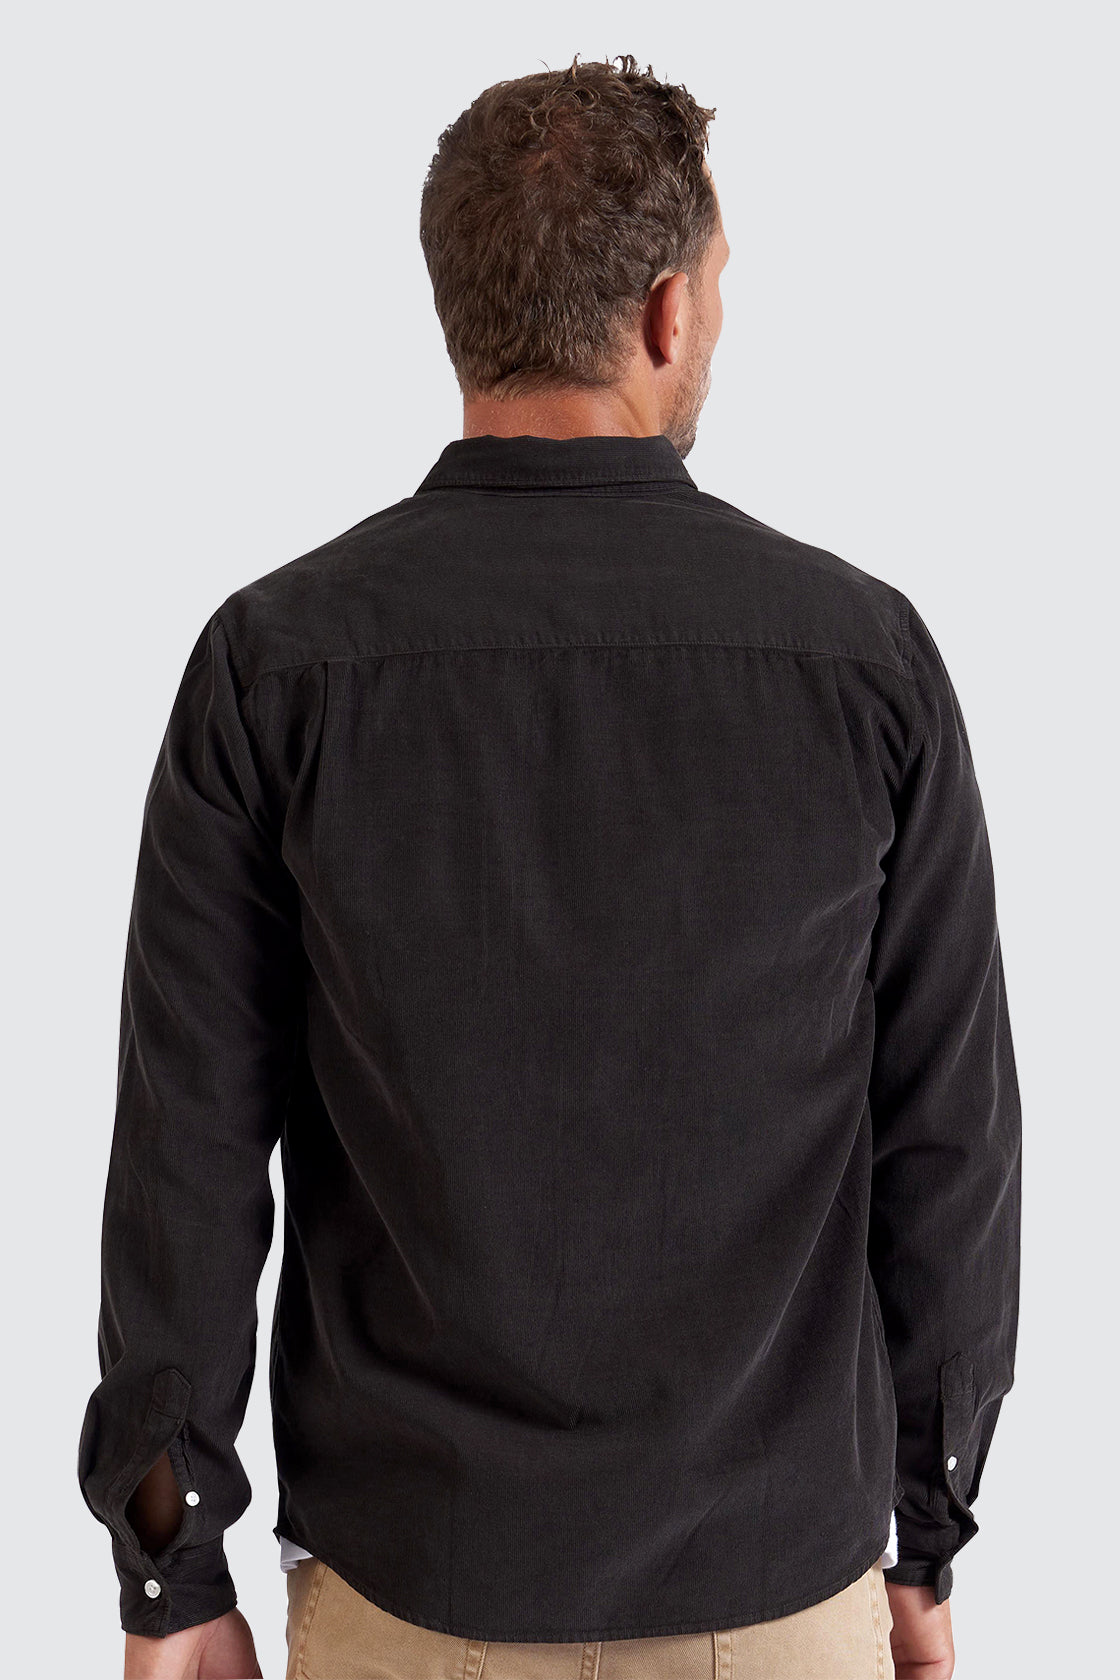 Academy Brand Jack Cord Shirt Black